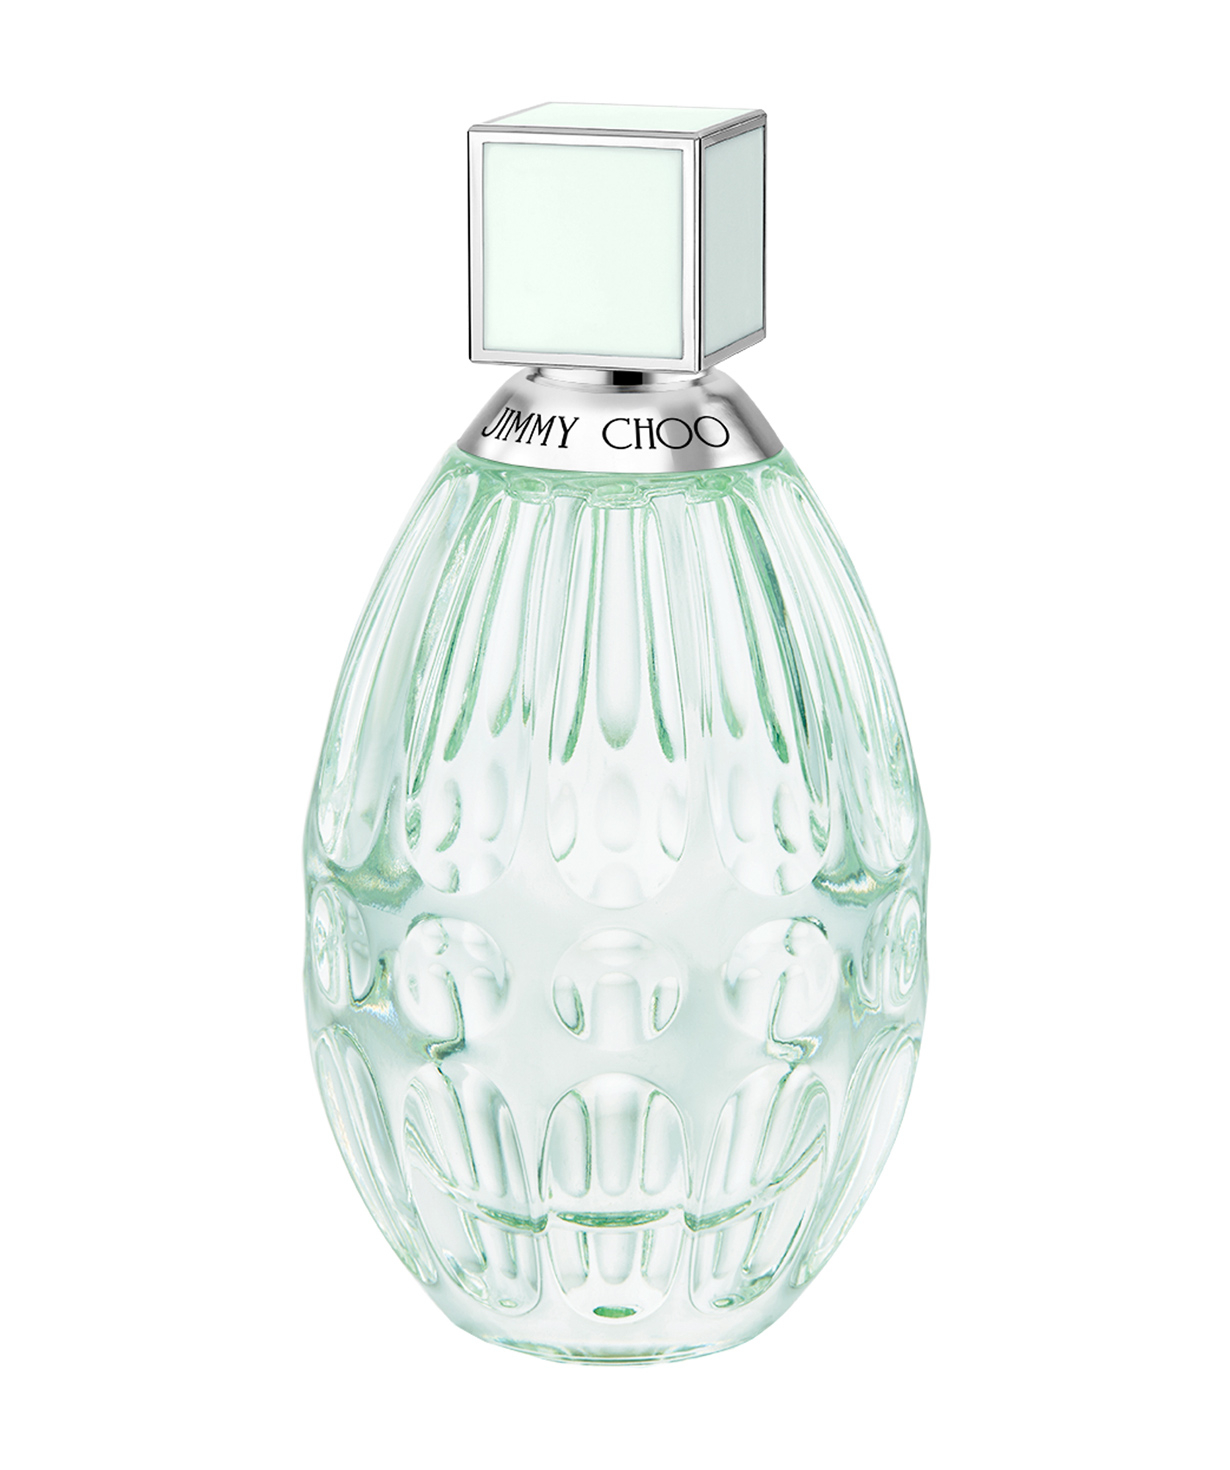 Perfume «Jimmy Choo» Floral, for women, 60 ml